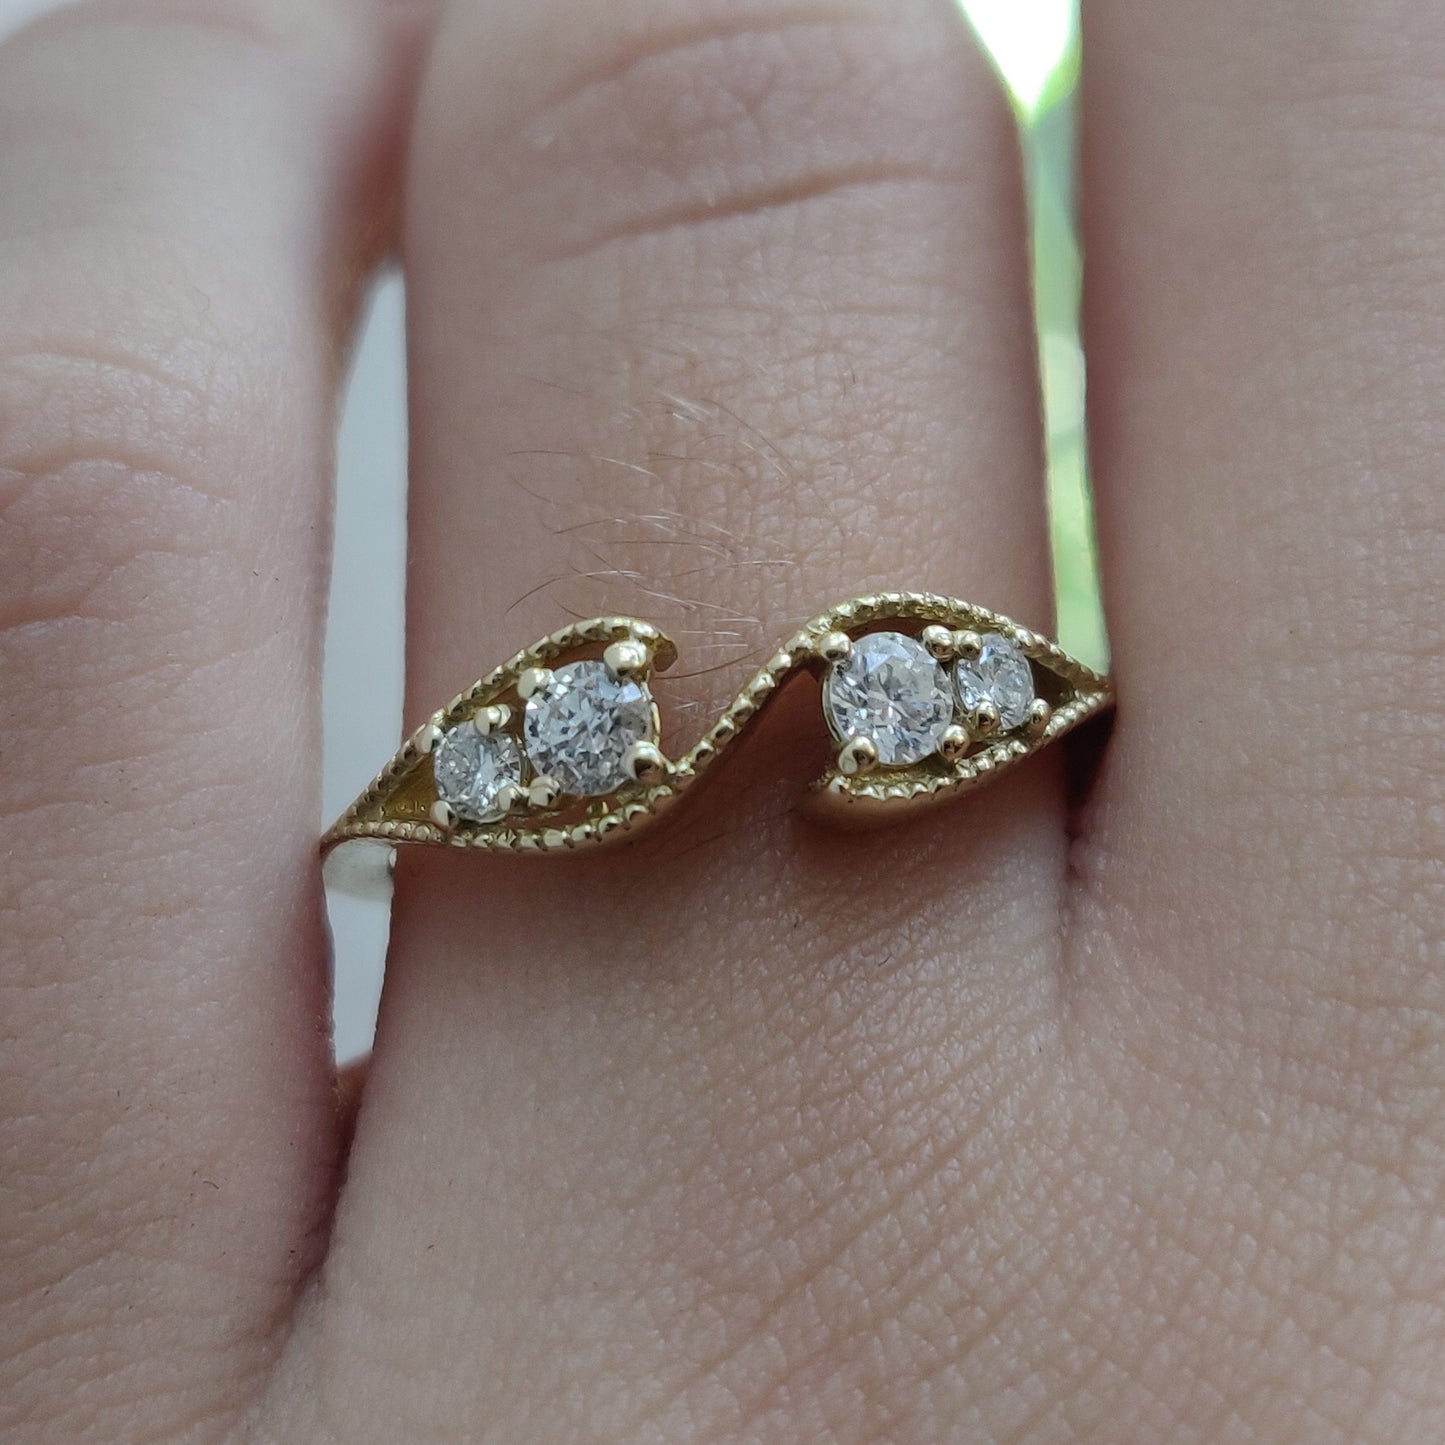 Amazing 0.10 SI2 Quality,Center Diamond , Total diamond wt. 0.30ct. 14K OR 18K Gold Bridal Engagement Wedding Anniversary Gift Ring